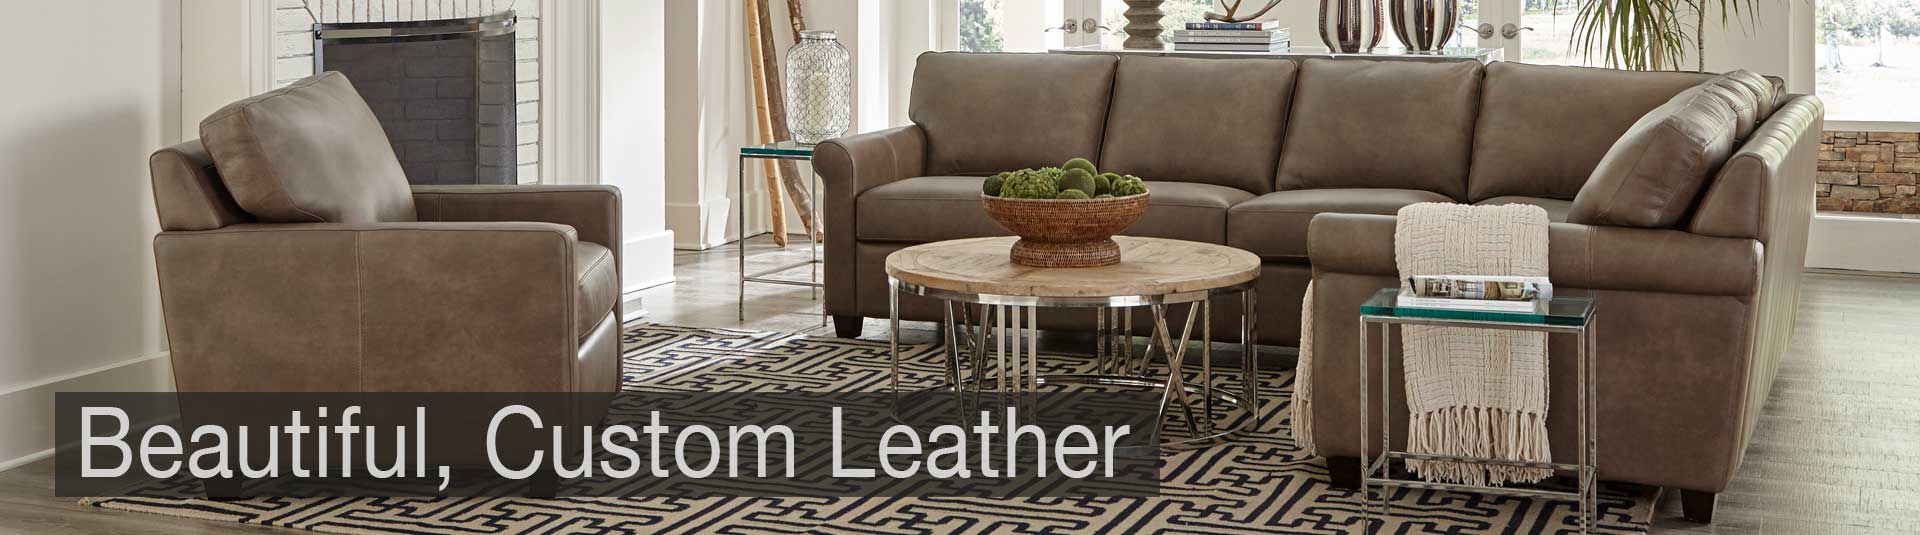 Beautiful Custom Leather Furniture at Benson Stone Company